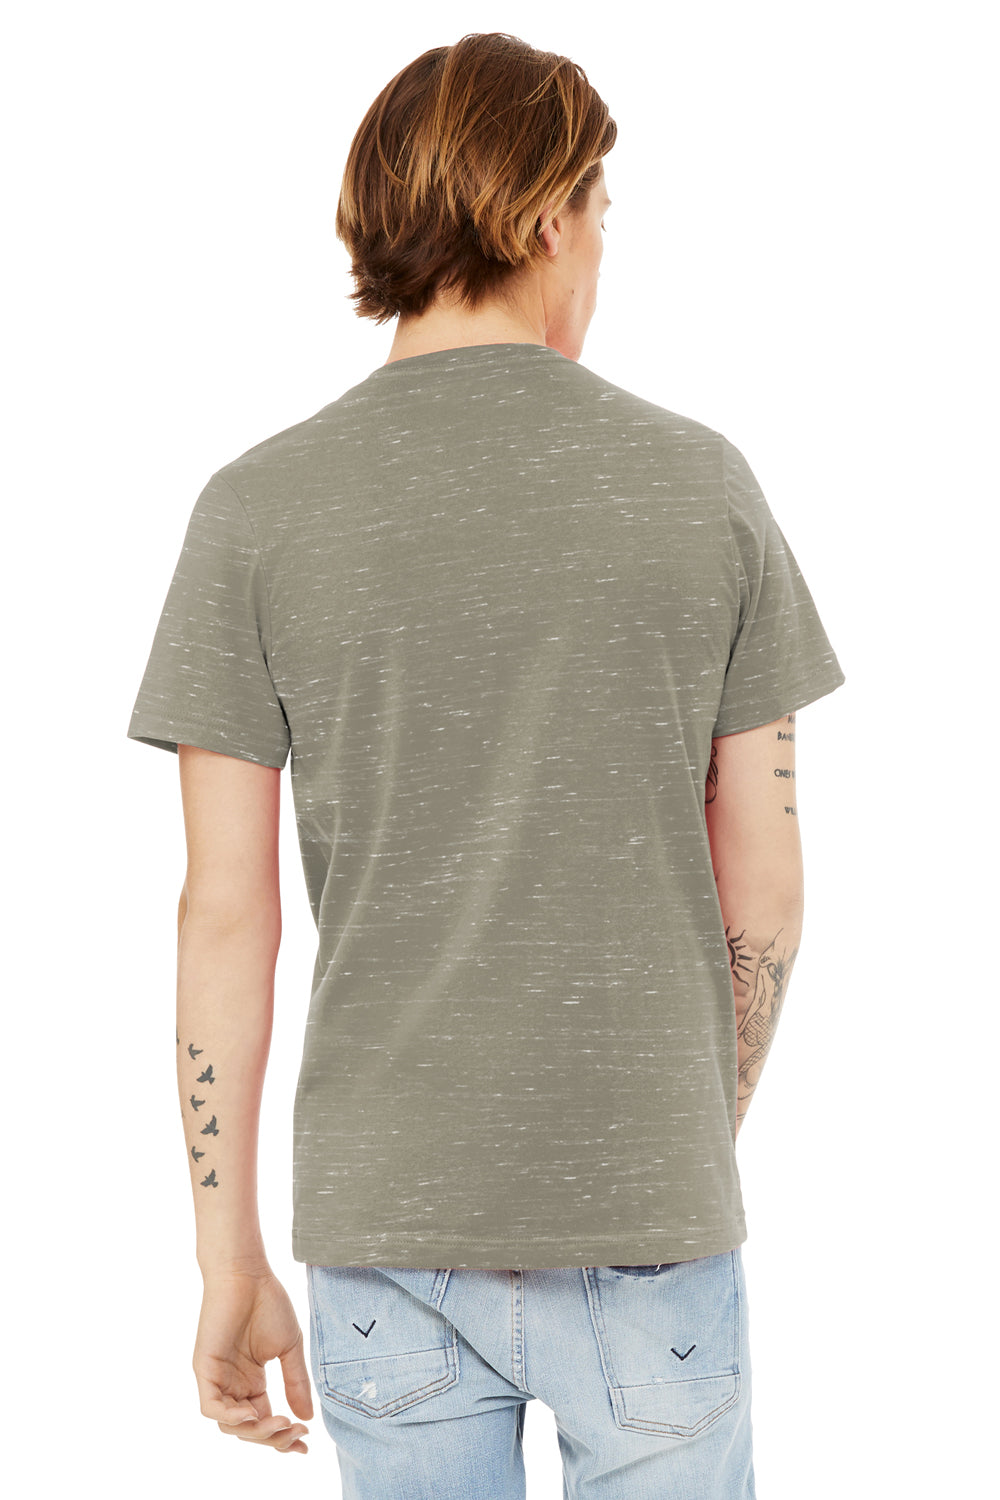 Bella + Canvas BC3655/3655C Mens Textured Jersey Short Sleeve V-Neck T-Shirt Stone Marble Model Back